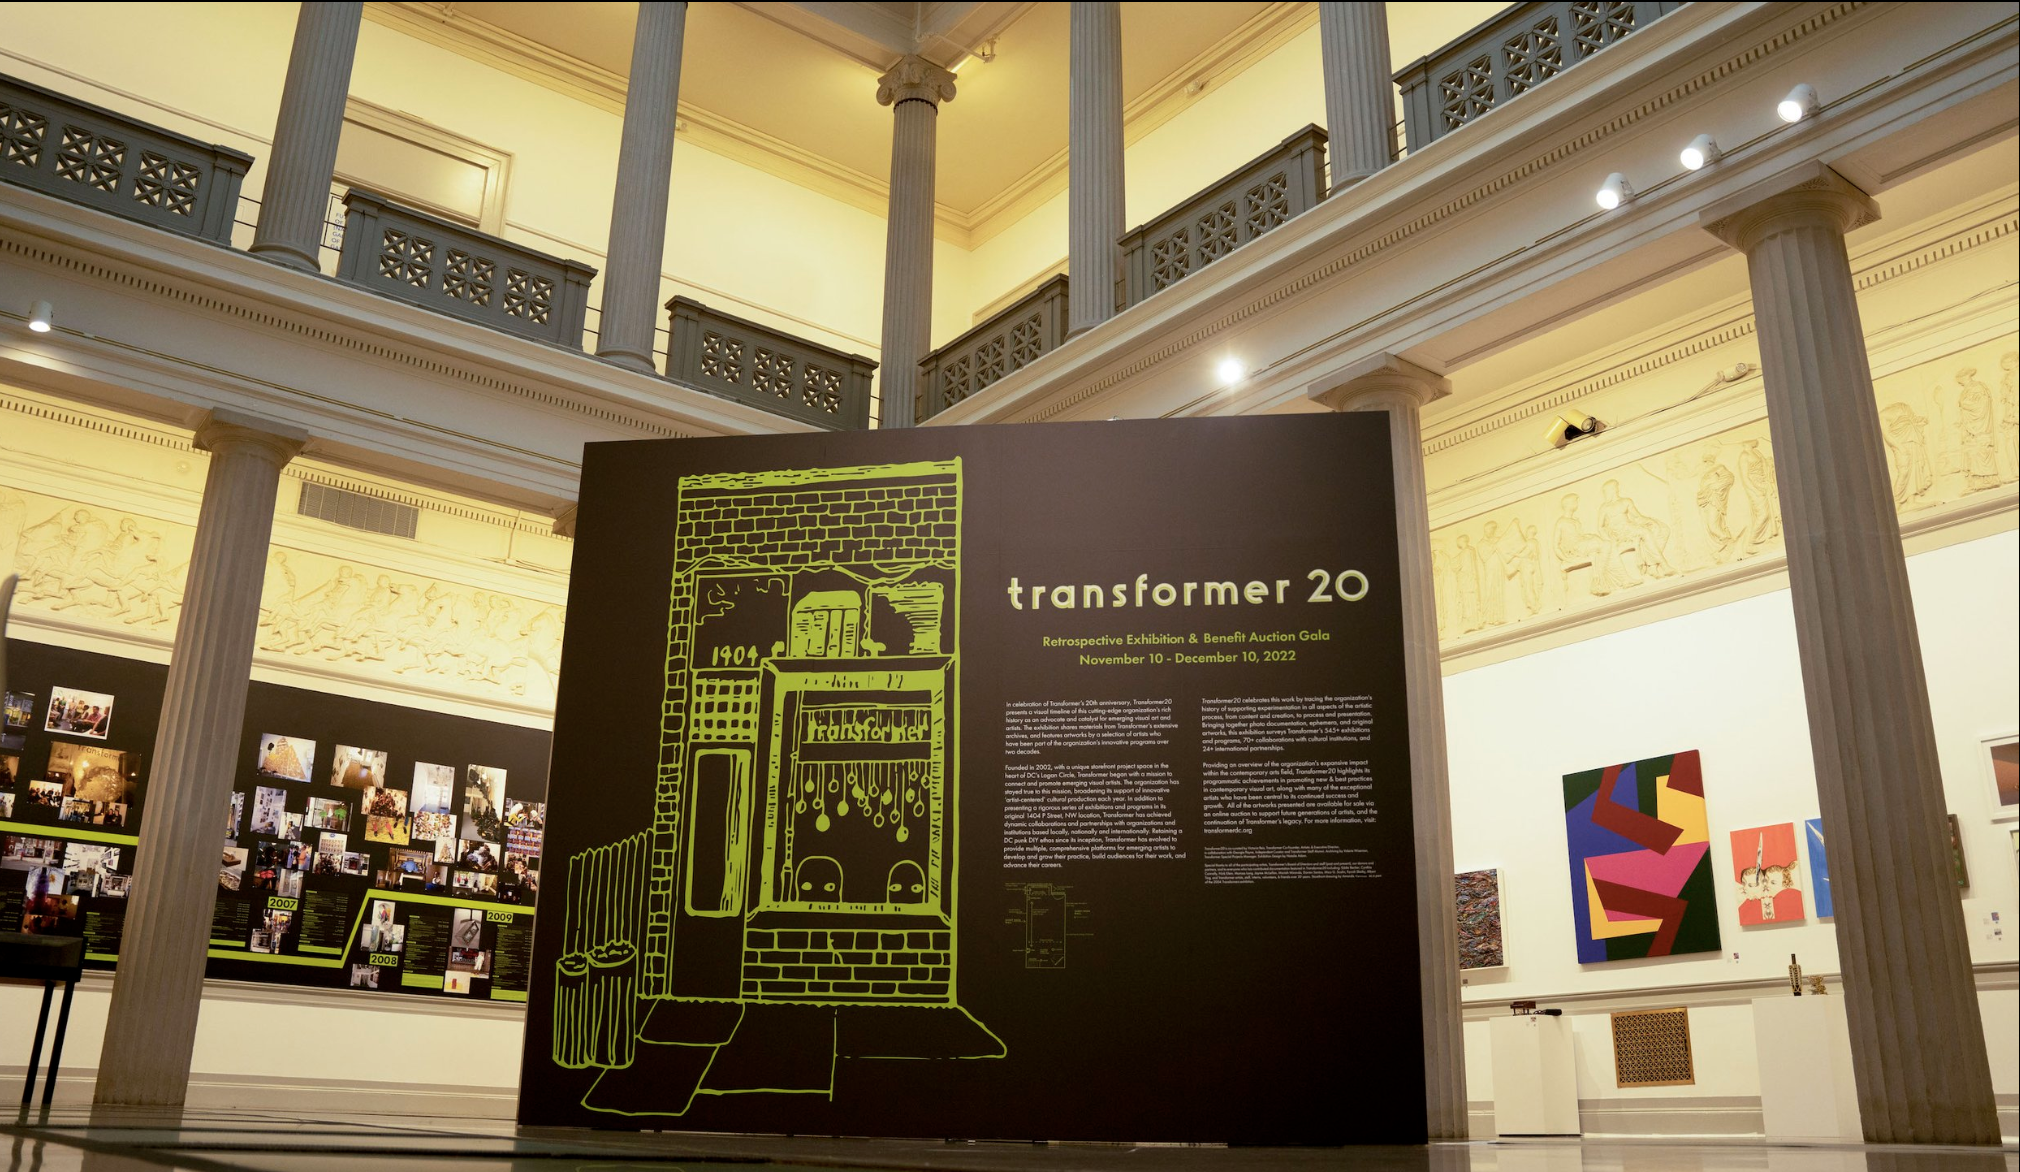 Transformer’s 20th anniversary